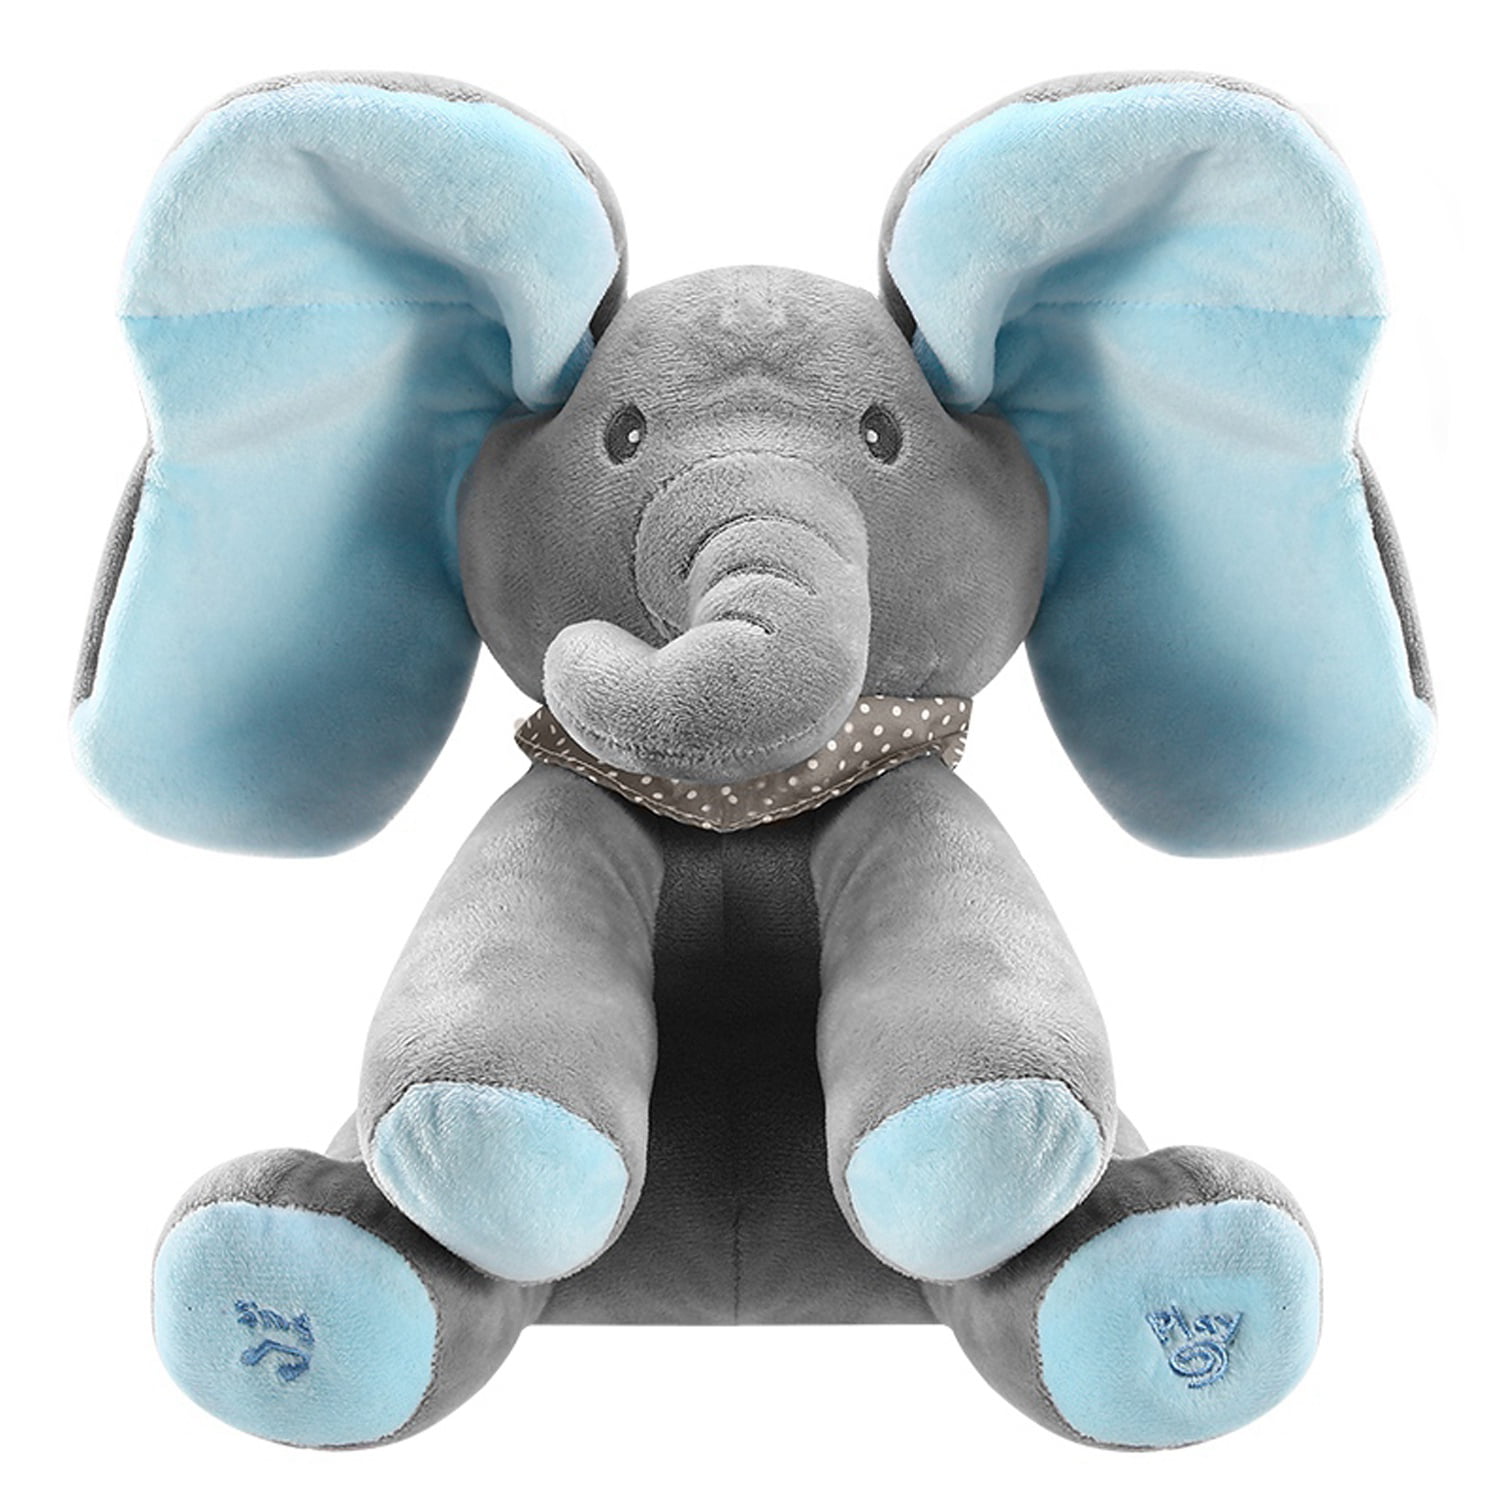 Peek-a-boo Singing Elephant Music Doll Plush Toy Stuffed Toys Kids Birthday Gift 